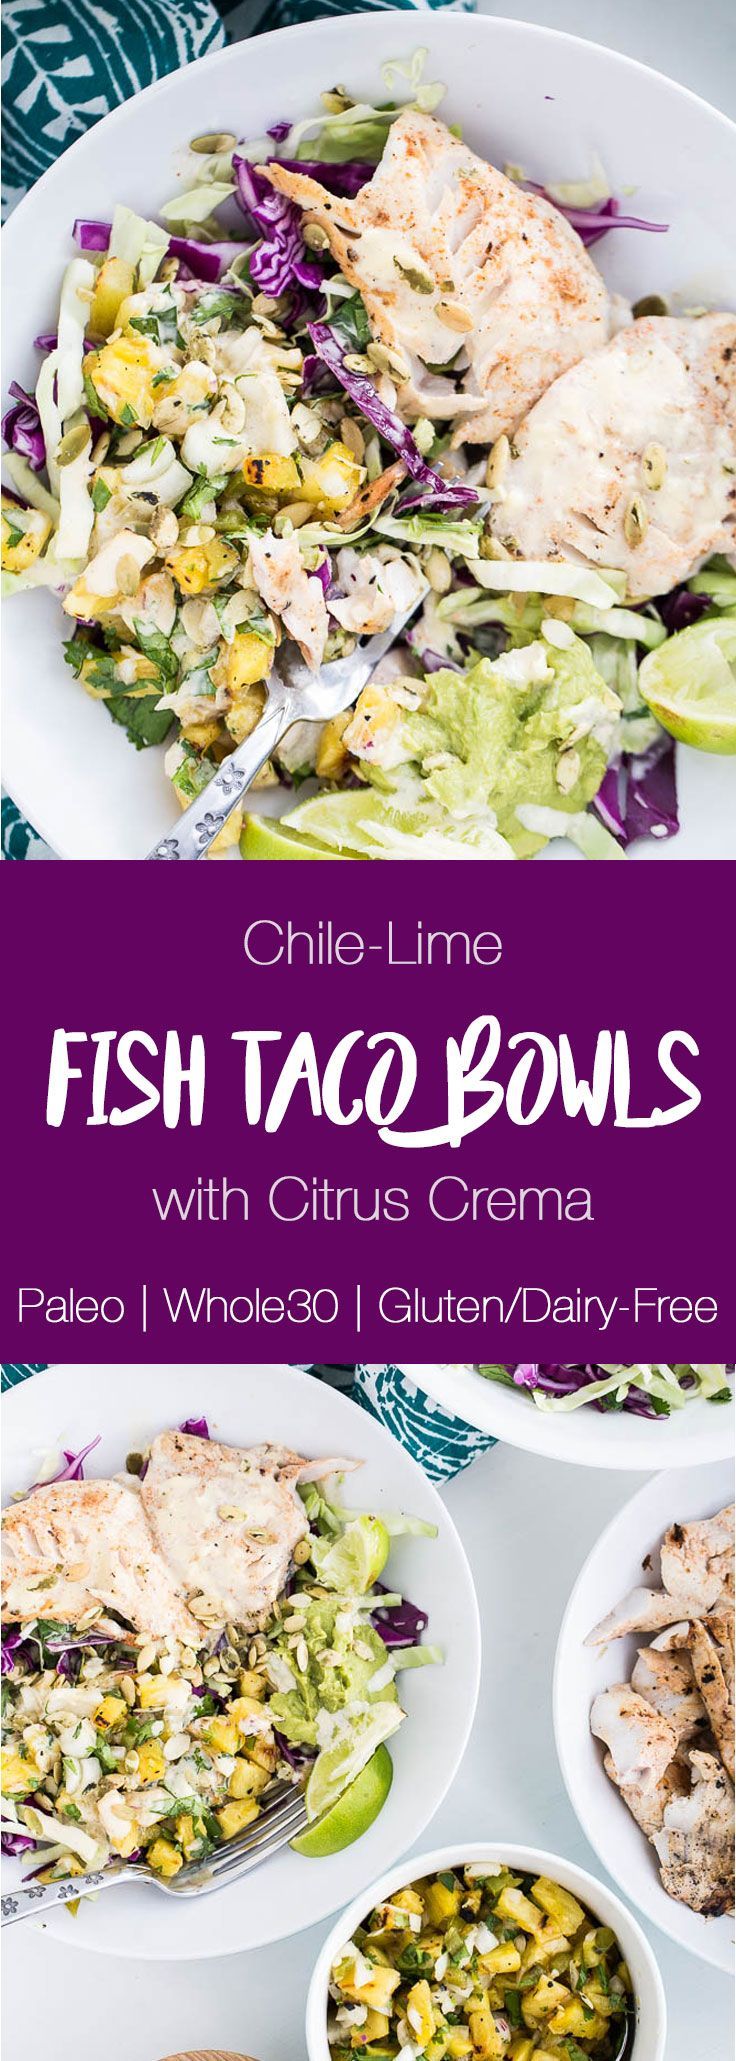 Chile-Lime Fish Taco Bowls with Citrus Crema | paleo recipes | Whole30 recipes | fish recipes | g